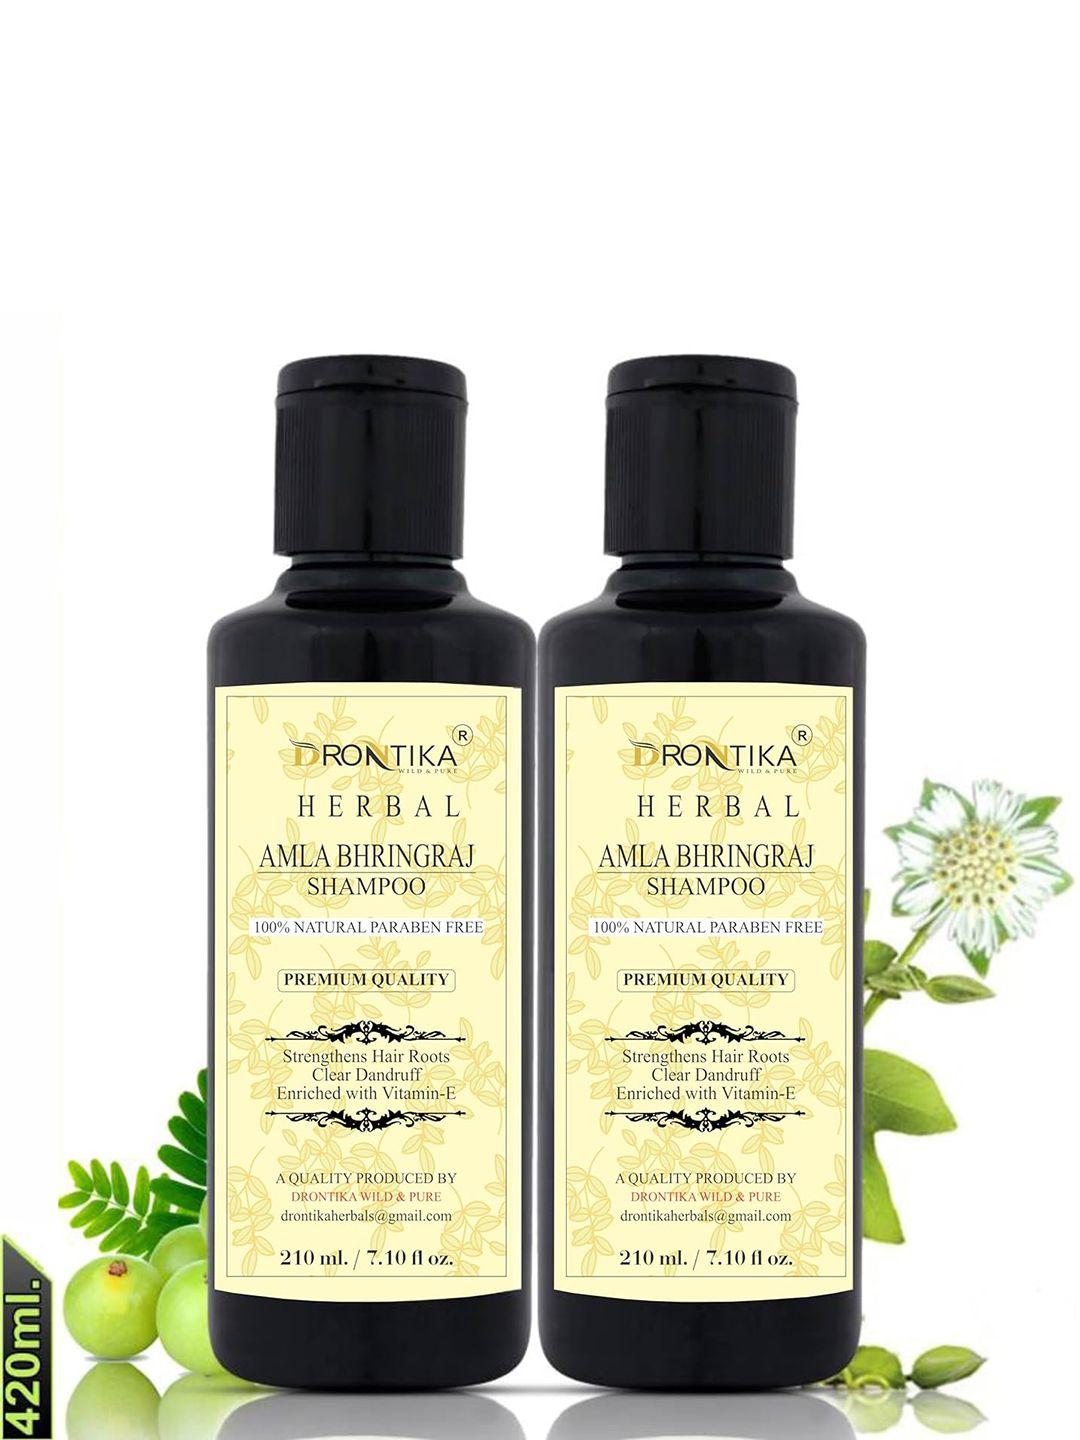 drontika set of 2 100% natural paraben free amla bhringraj shampoo - 210 ml each